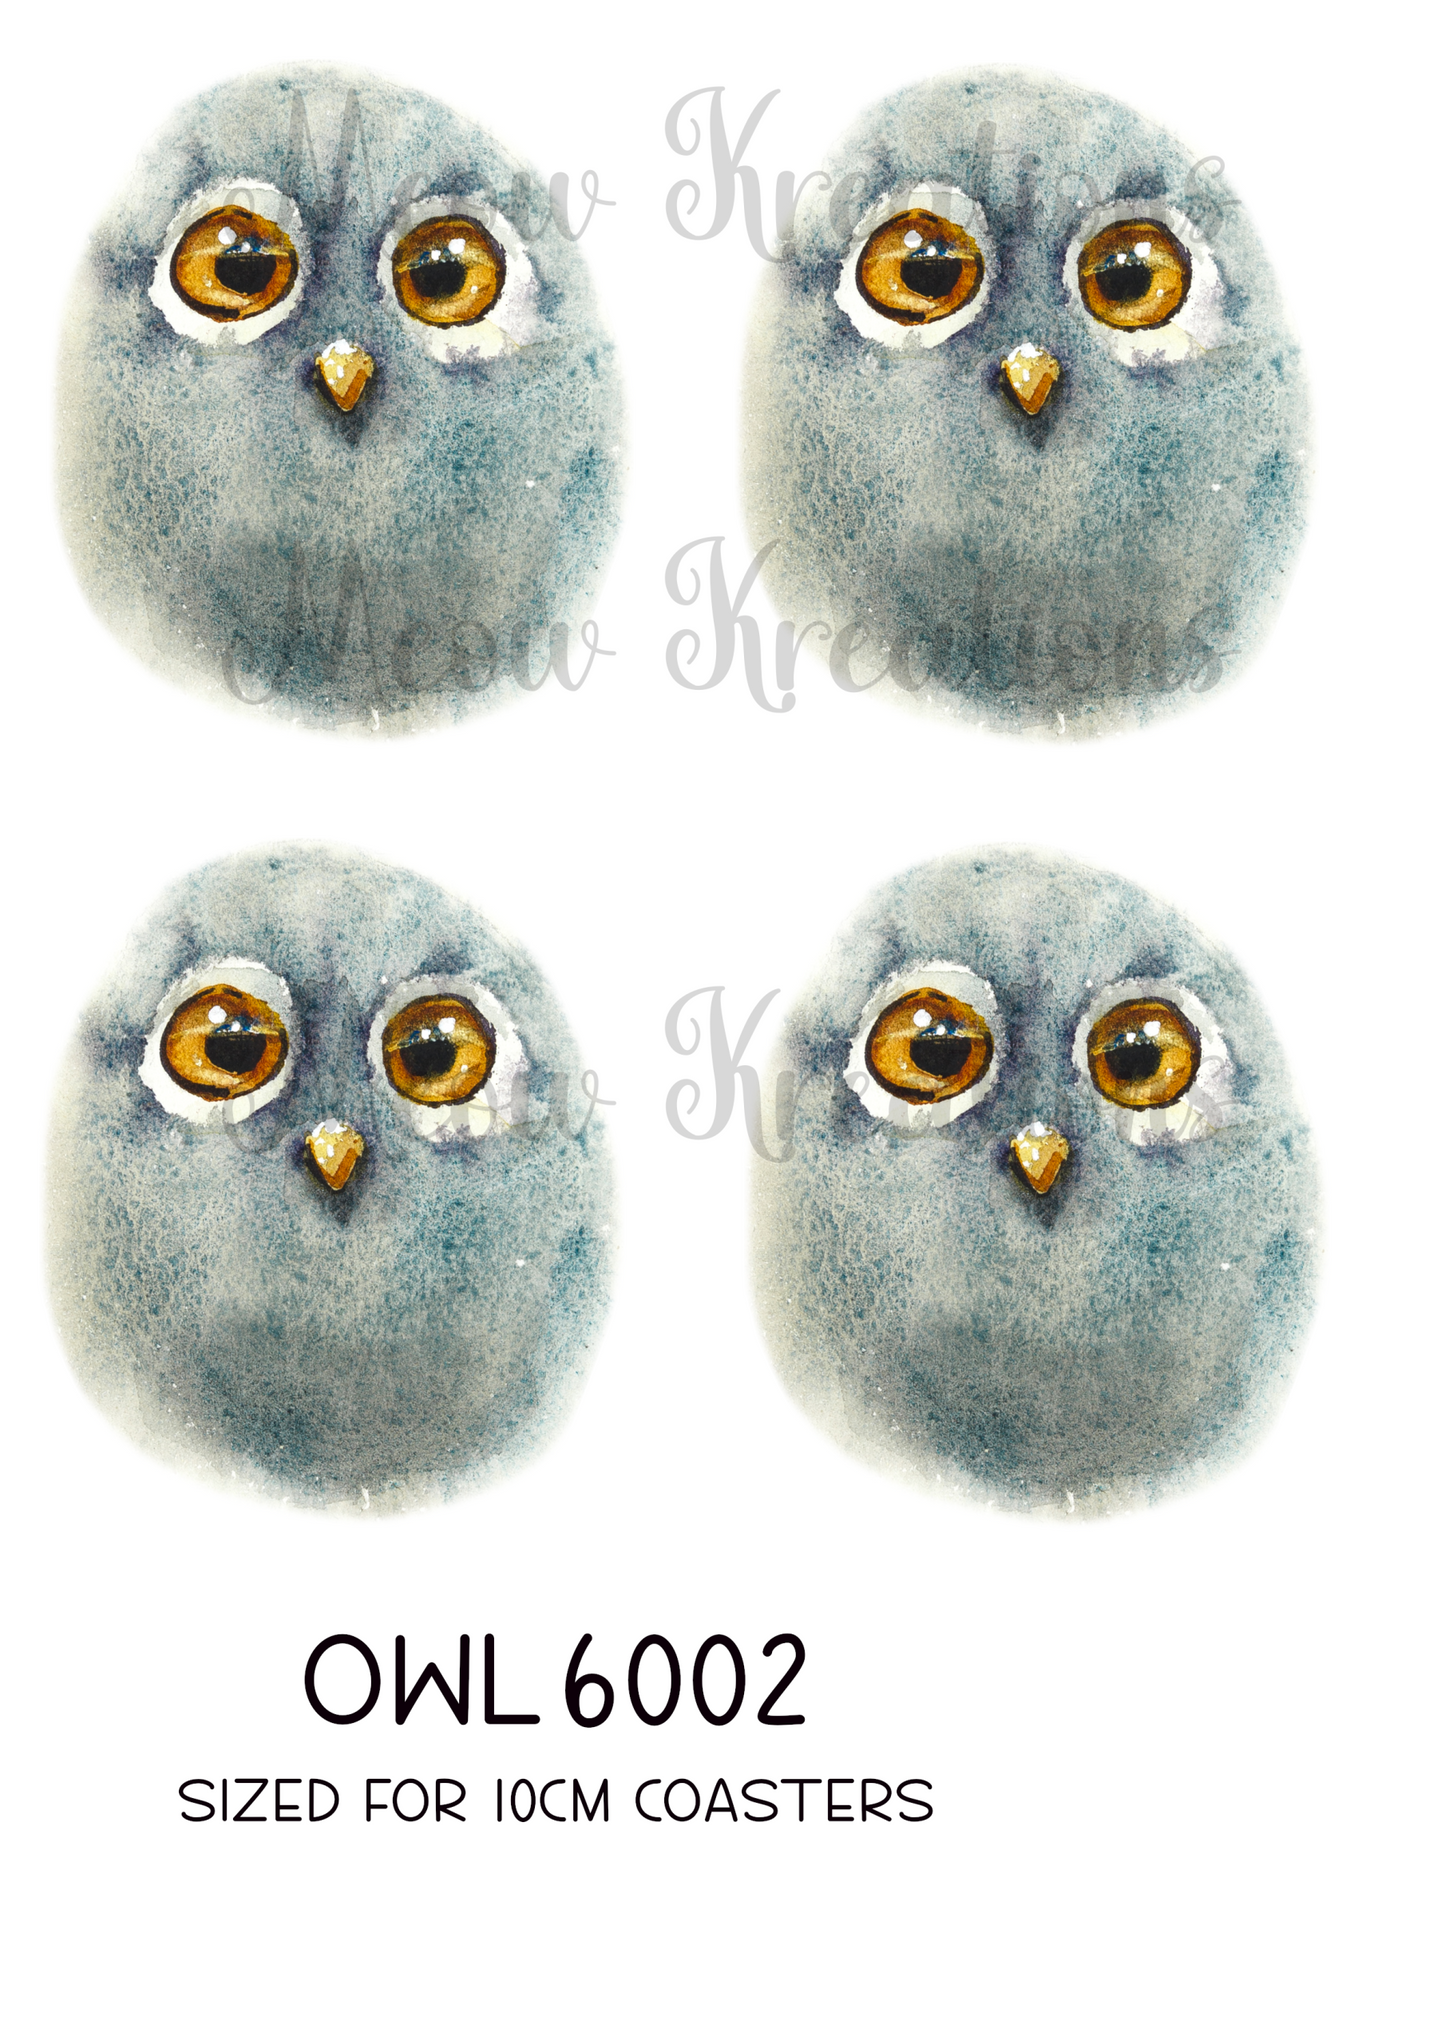 OWL 6002